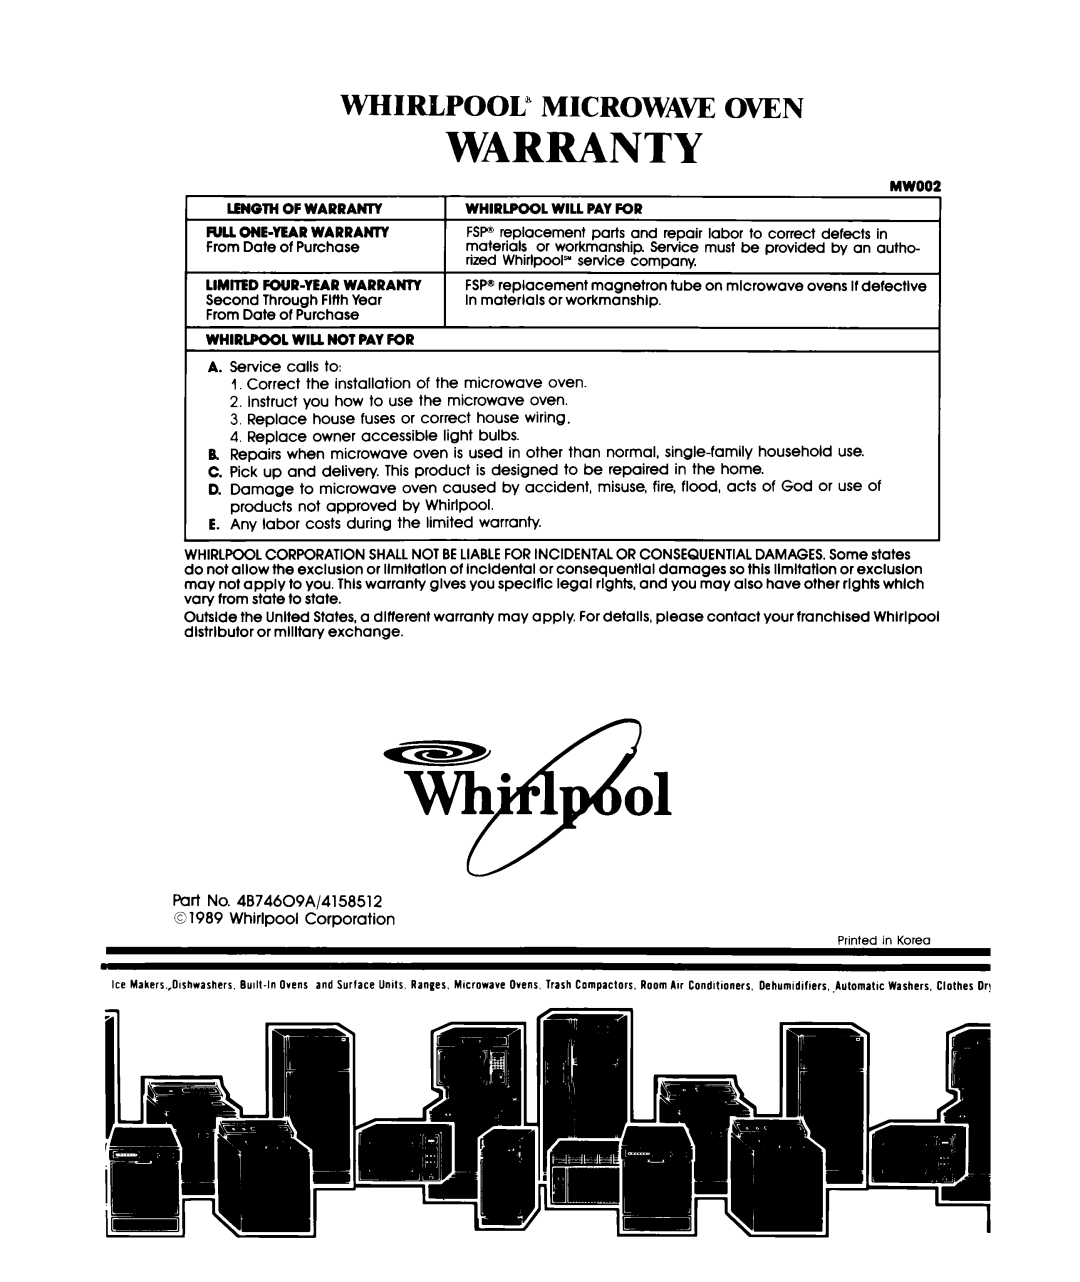 Whirlpool MWIOOOXW manual Microwave, Oven, Warranty, Whirlpool” 